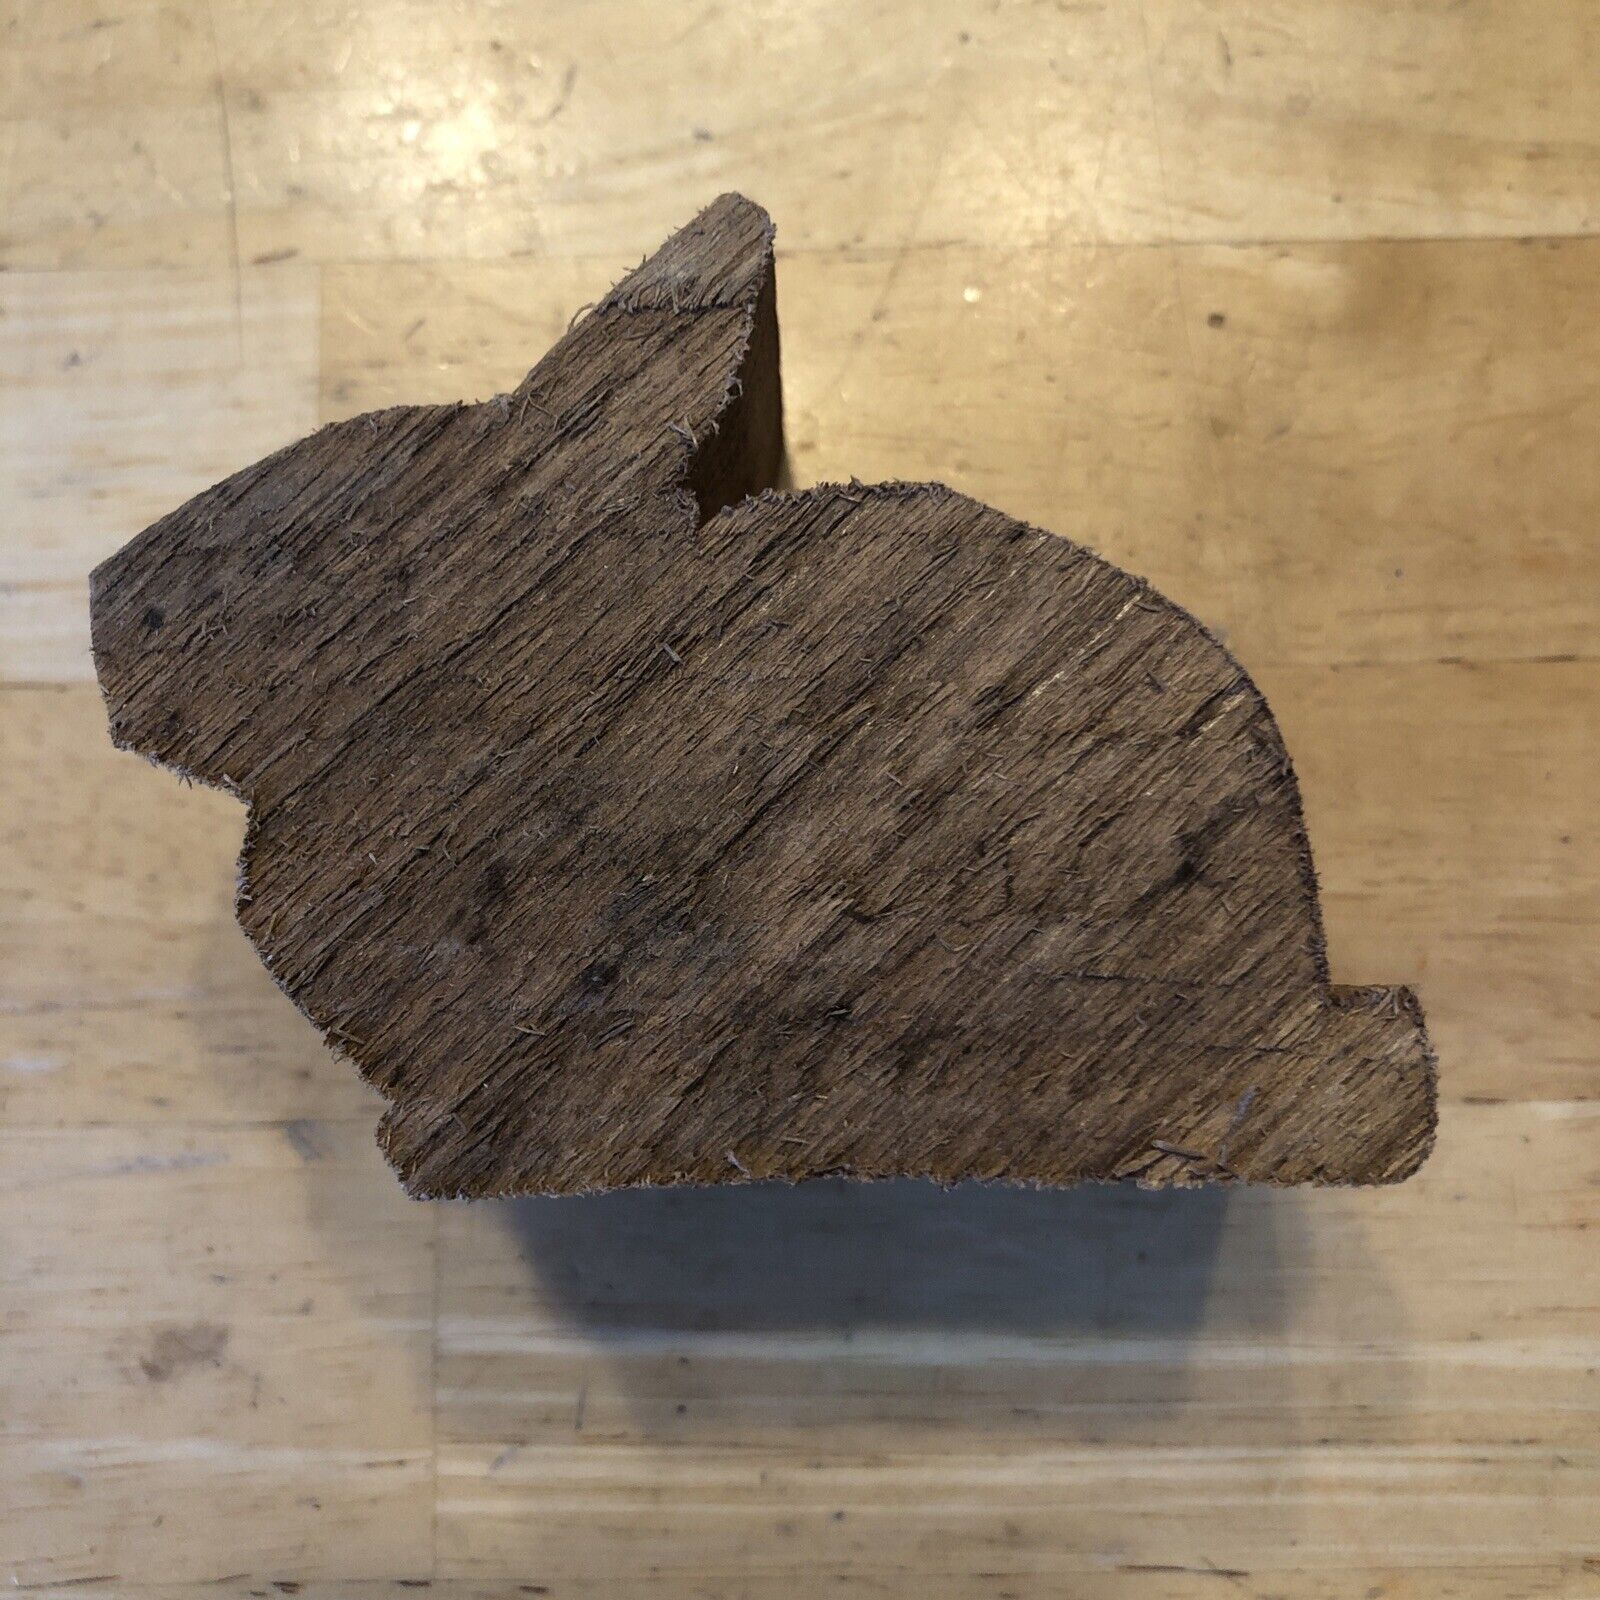 Bunny Rabbit Cutout Blank Wood Carving 3.5” Long Woodcraft Craft